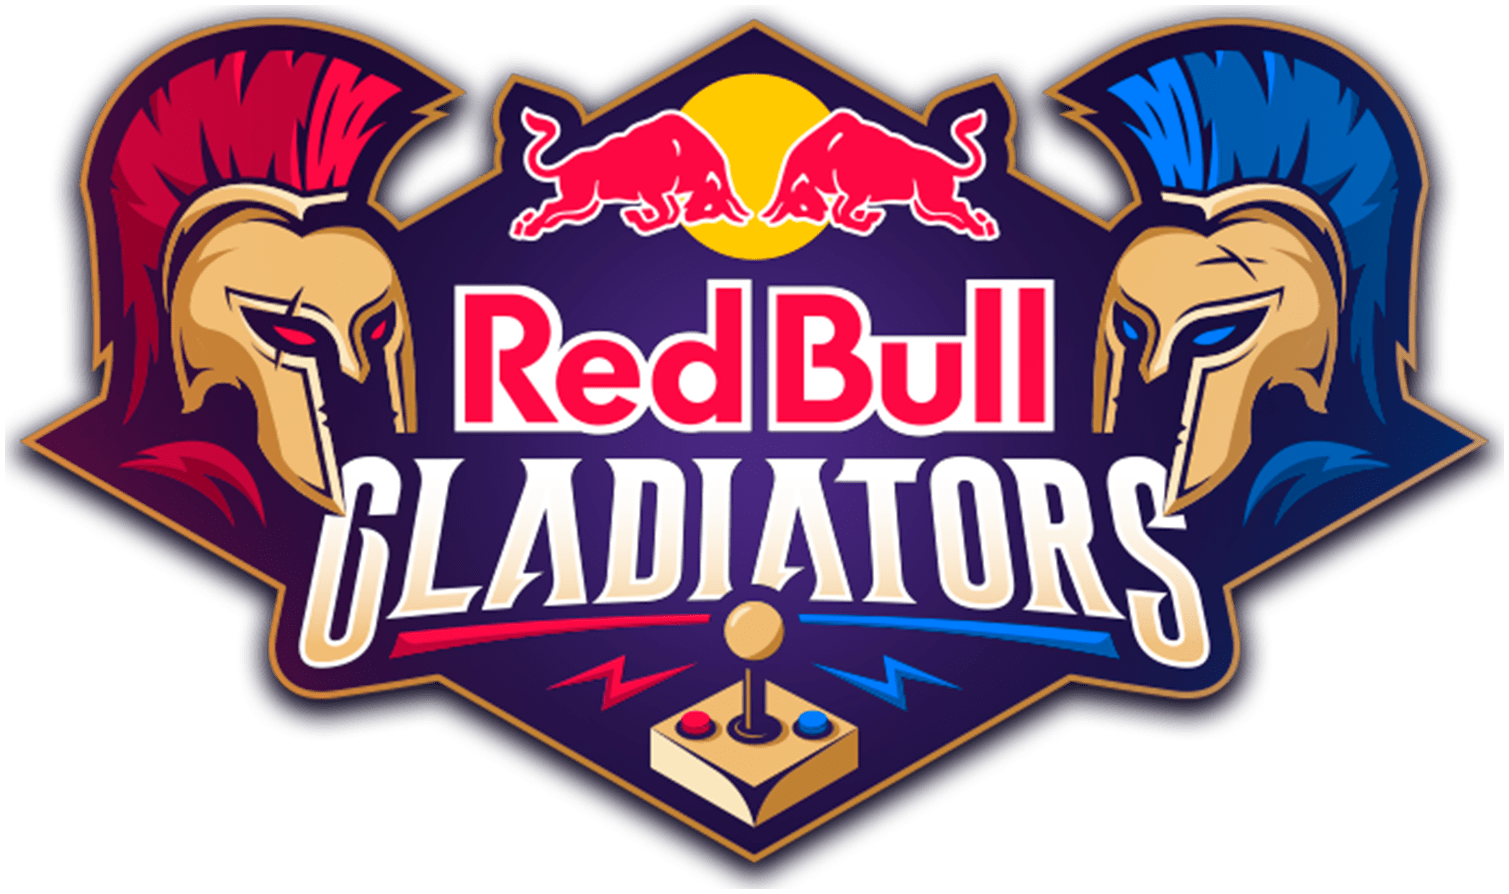 Red Bull Gladiators